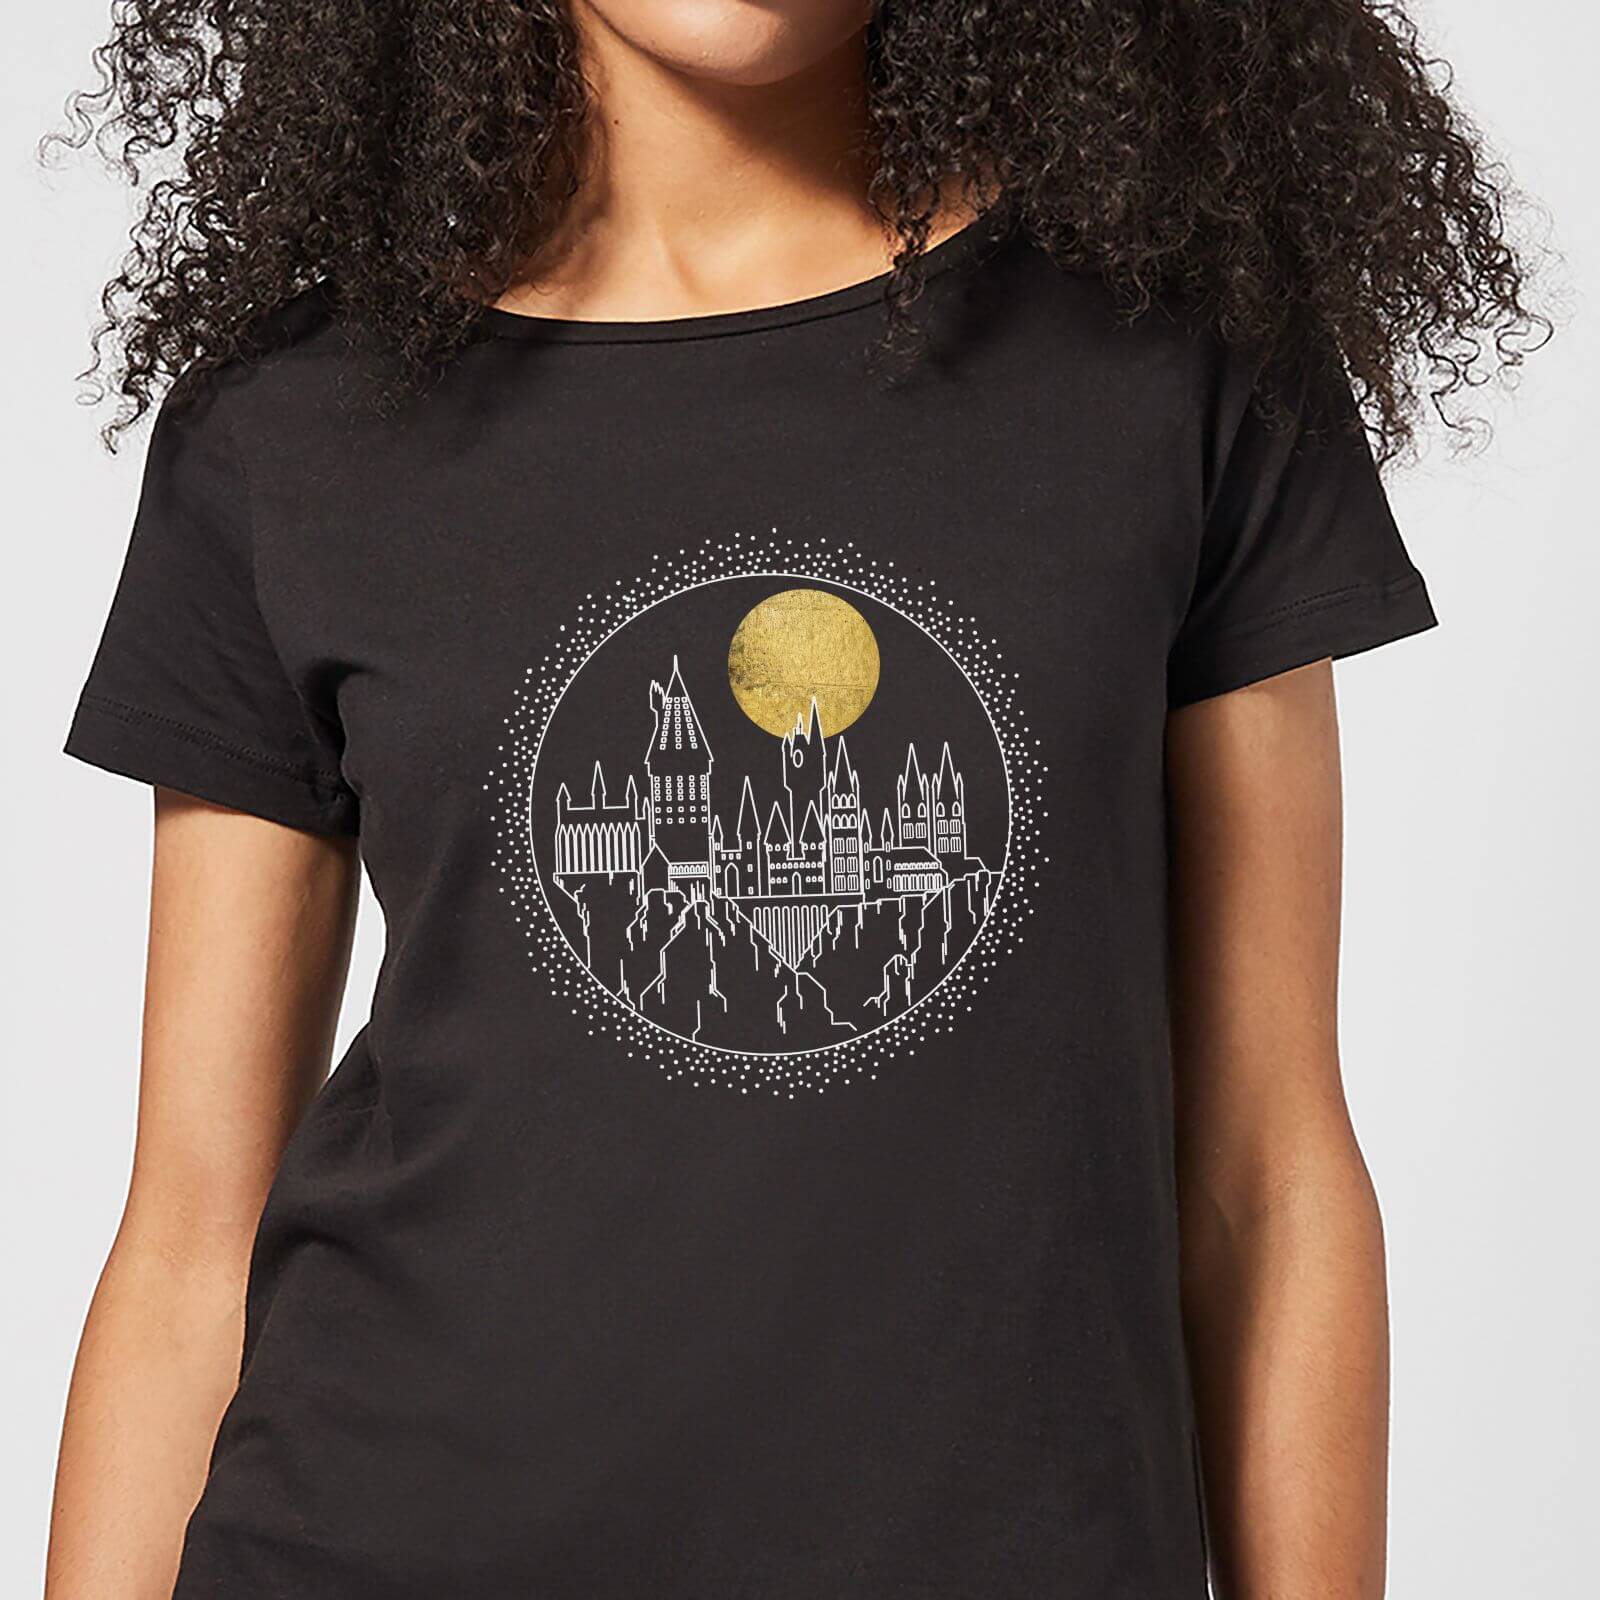 "Harry Potter Hogwarts Castle Moon Women's T-Shirt - Black - 4XL"